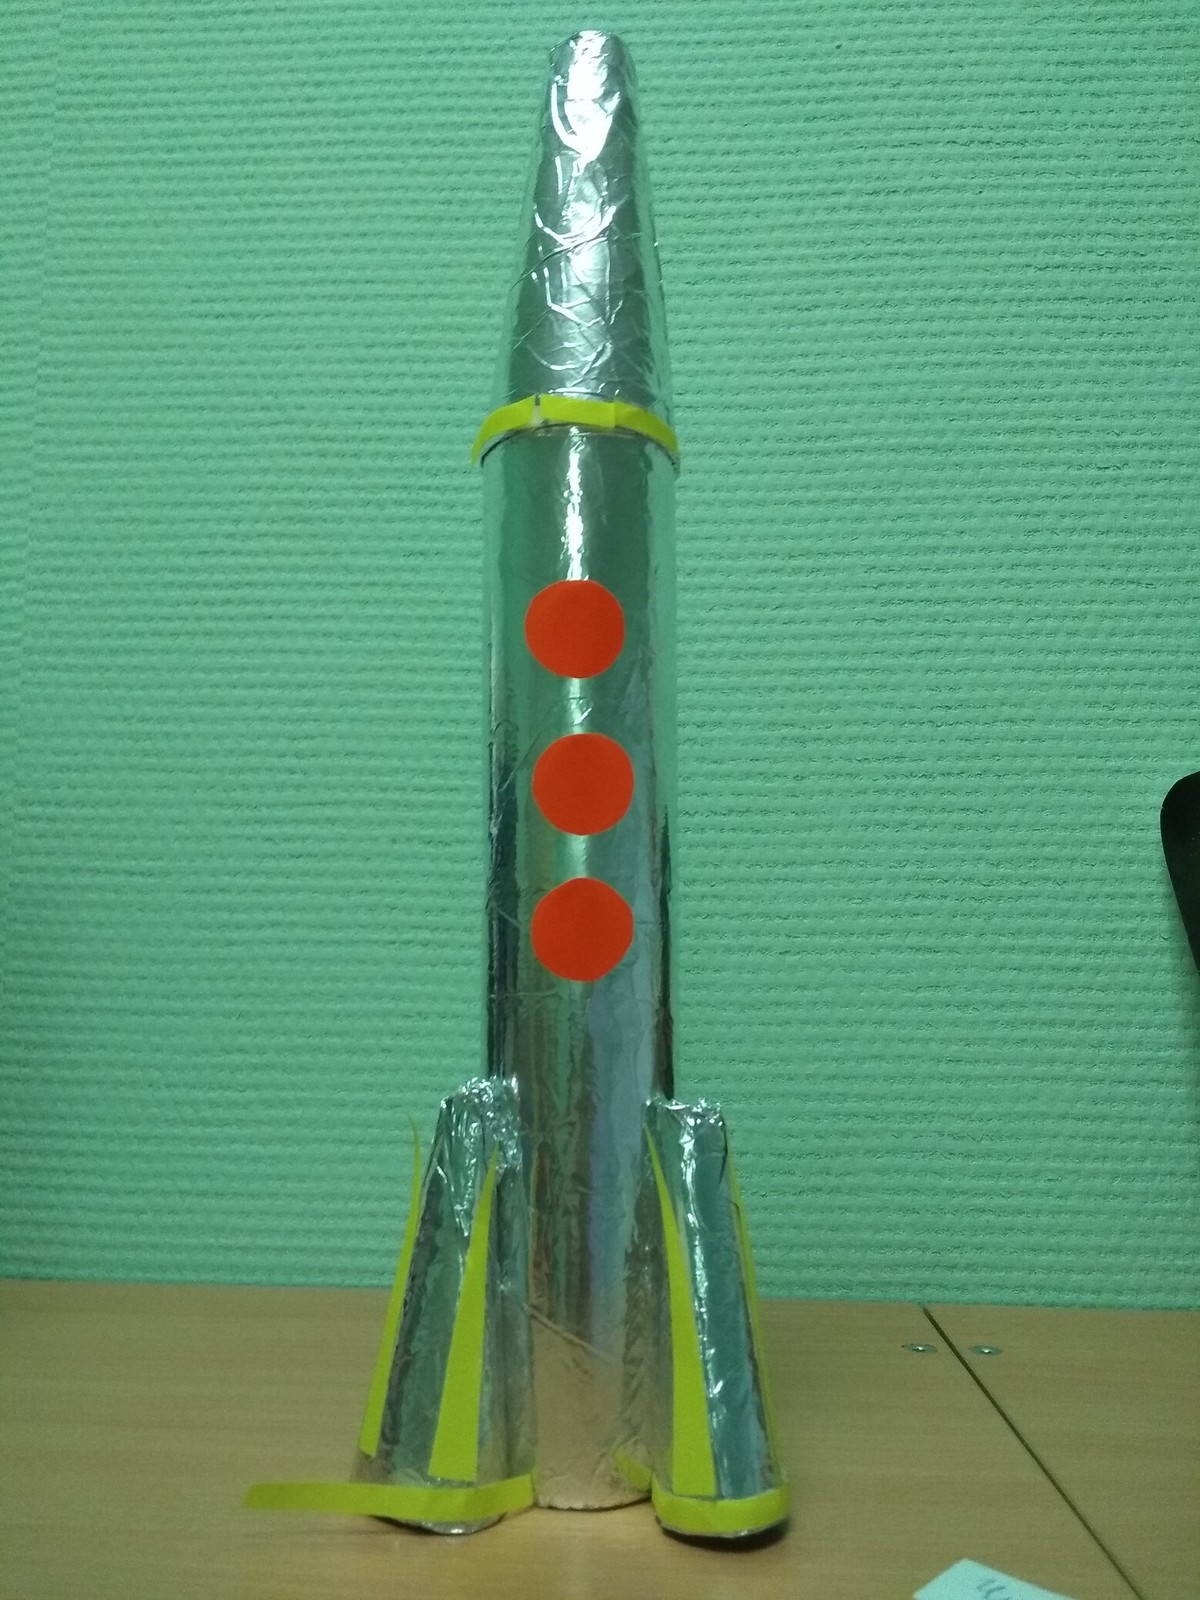 Ракета поделка в школу. Ракета поделка. Космическая ракета поделка. Ракета поделка своими руками. Поделка ракета для детского сада.